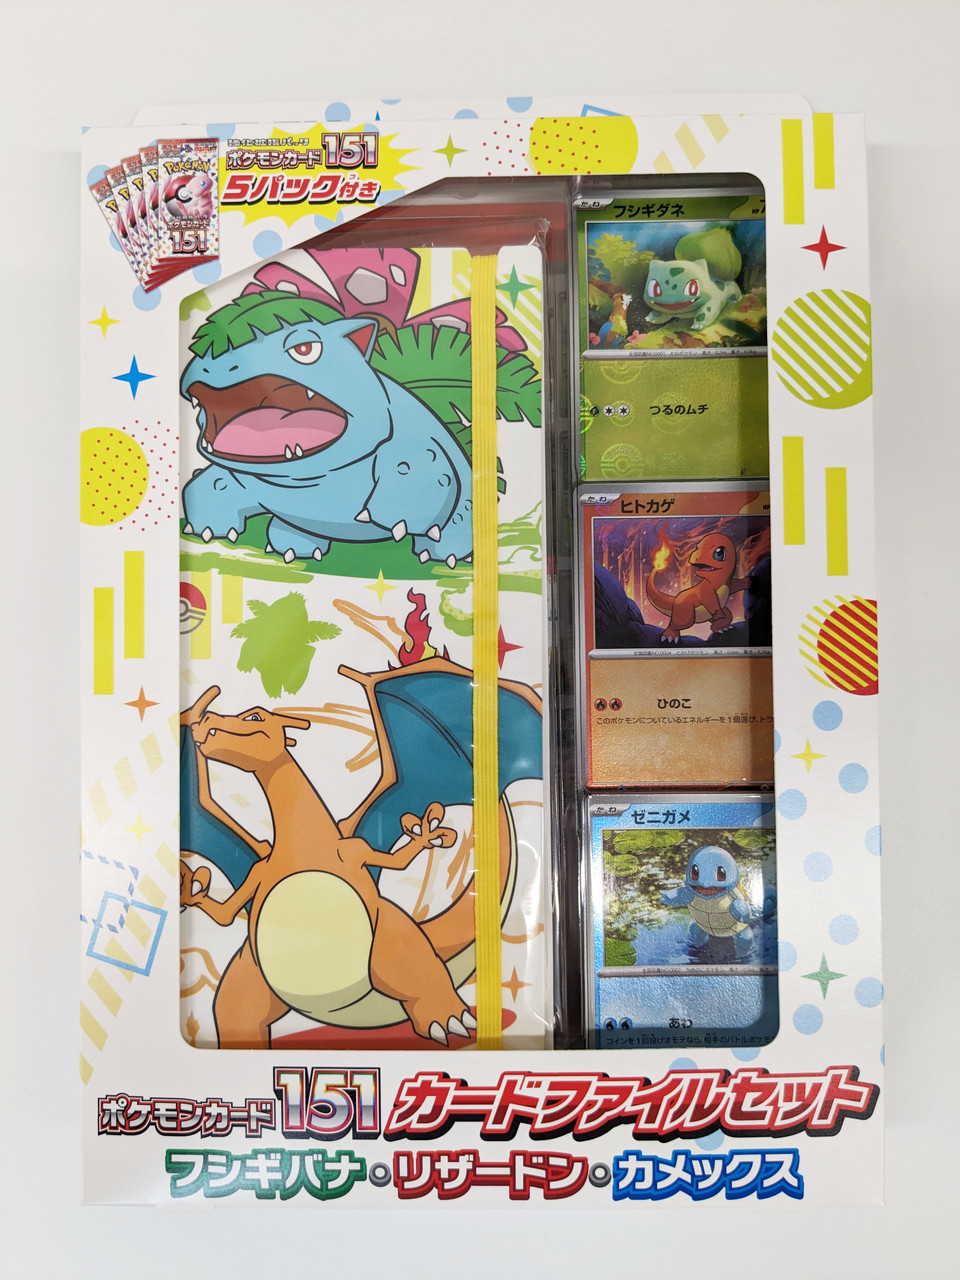 Charmander Pokemon 151 Pokemon Card